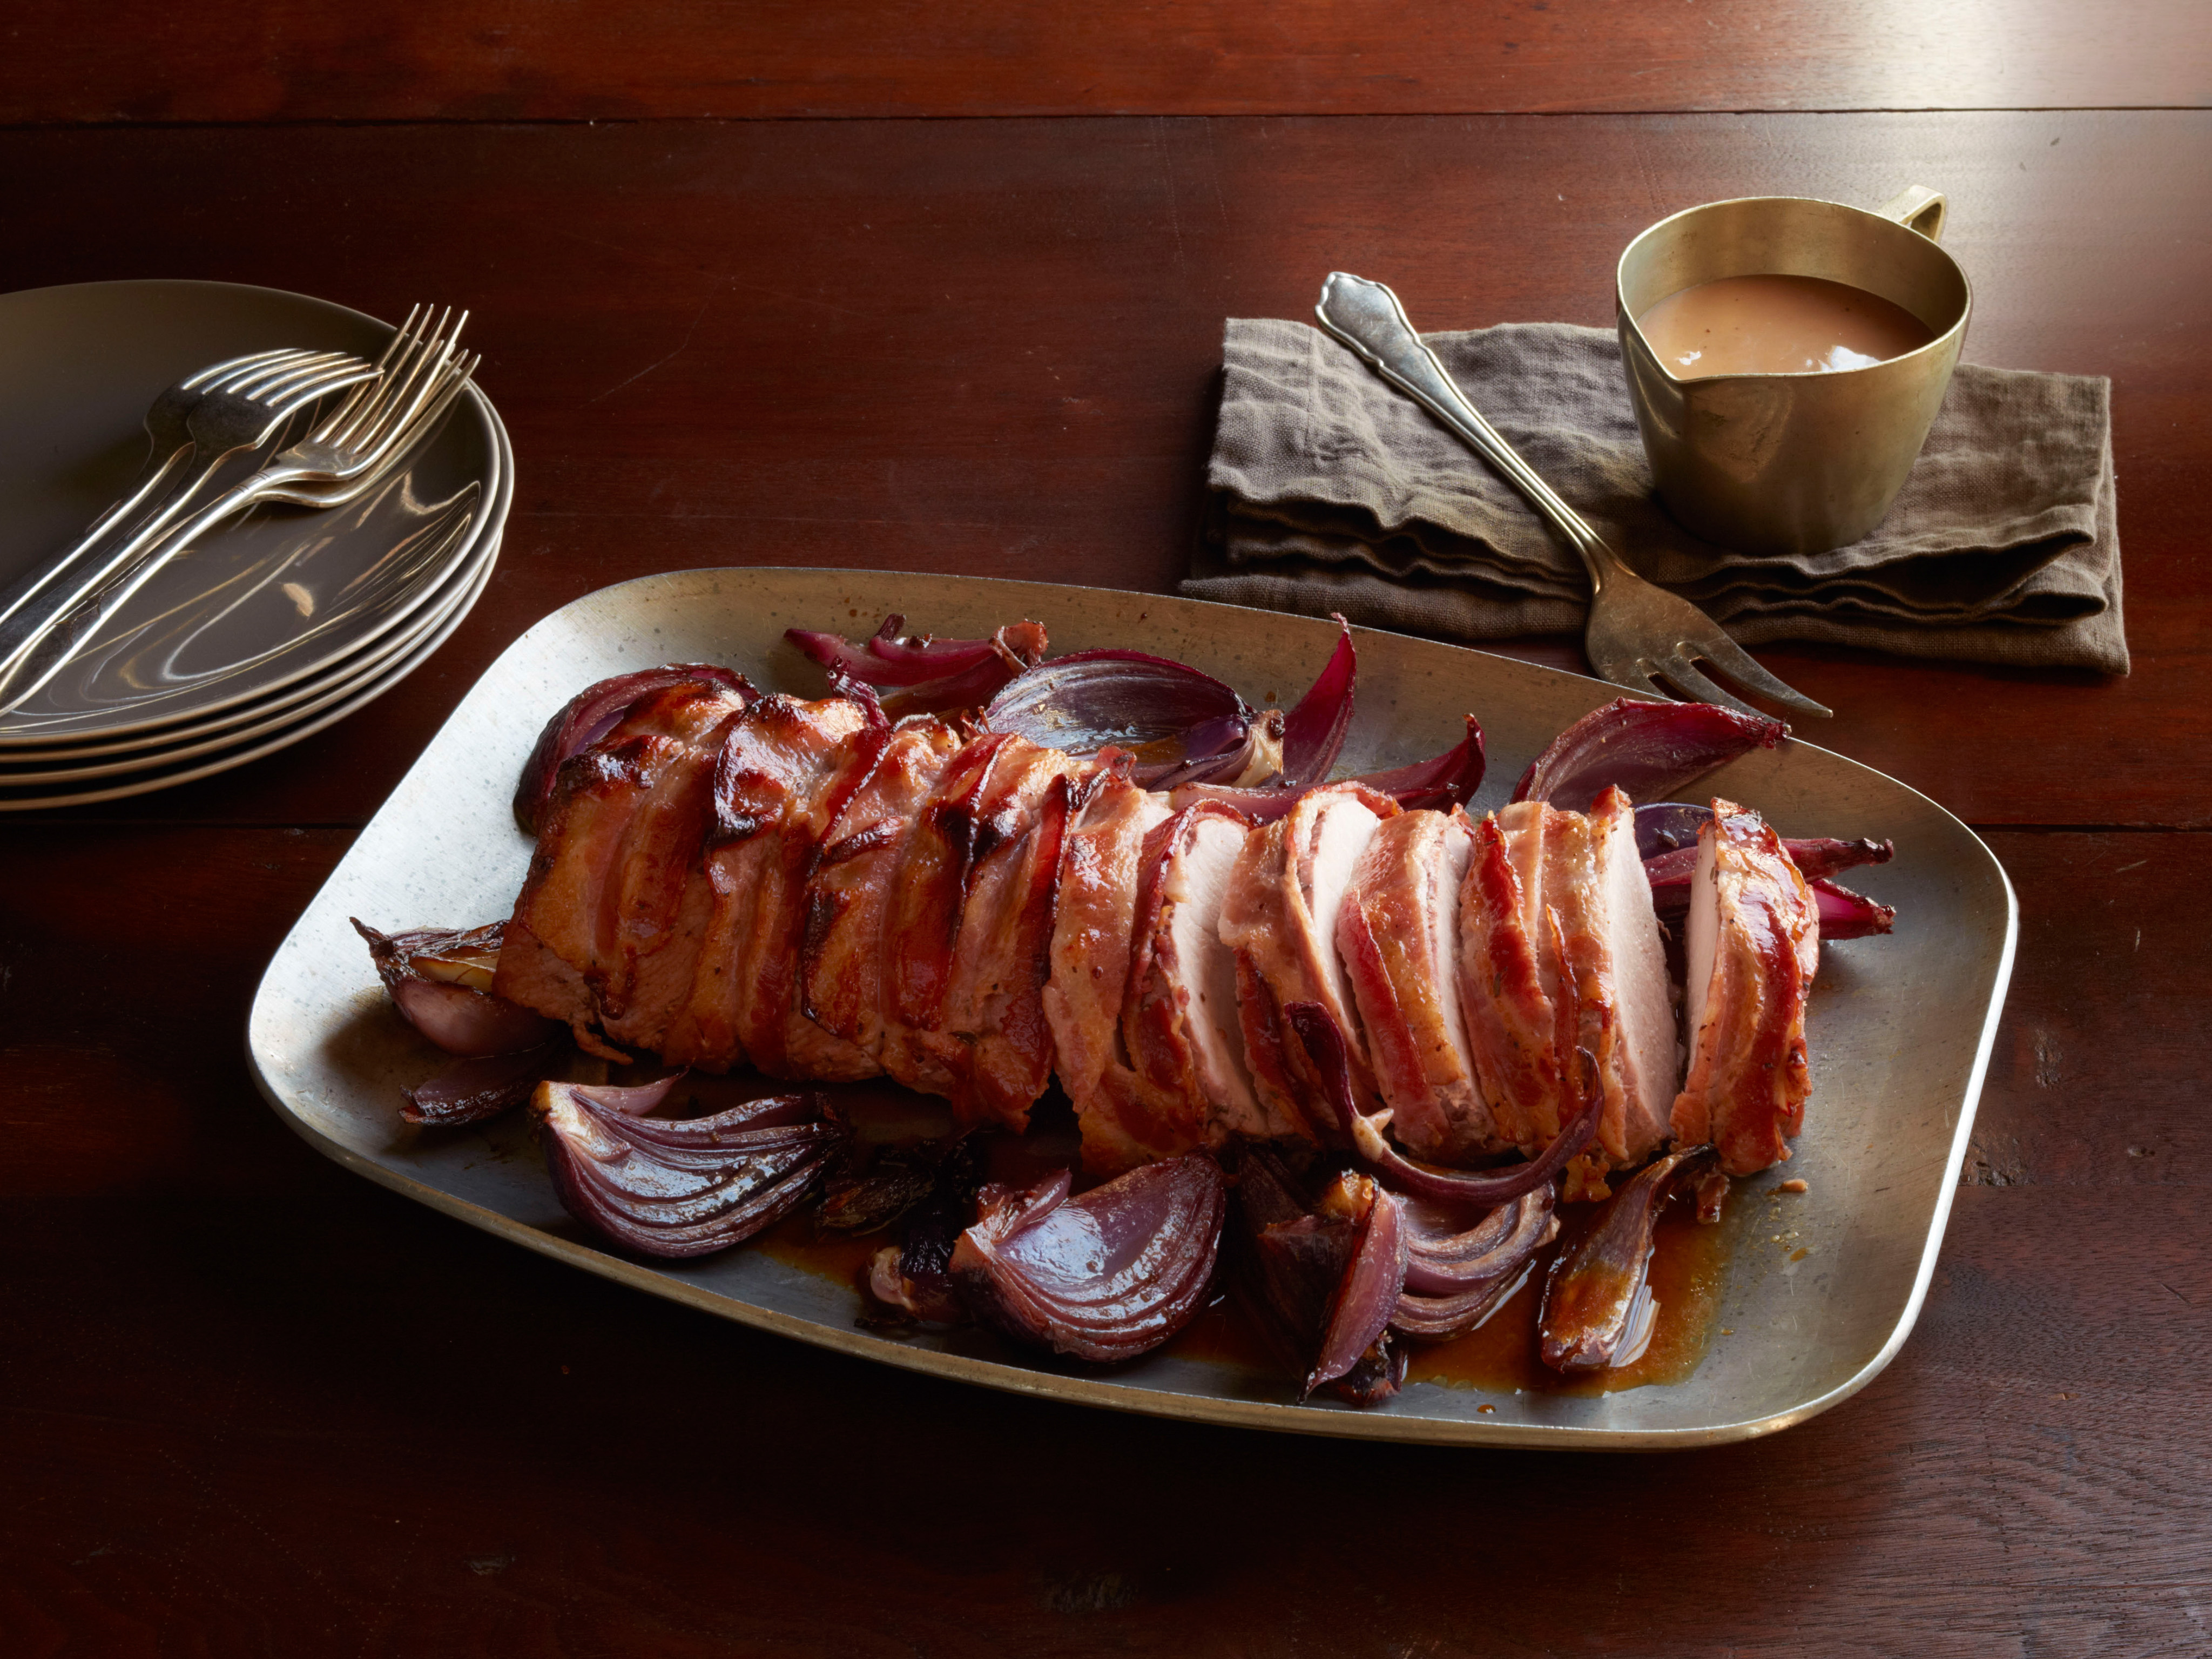 https://www.foodnetwork.com/content/dam/images/food/fullset/2014/2/7/1/FNM_030114-Bacon-Wrapped-Blackberry-Pork-Roast-Recipe_s4x3.jpg